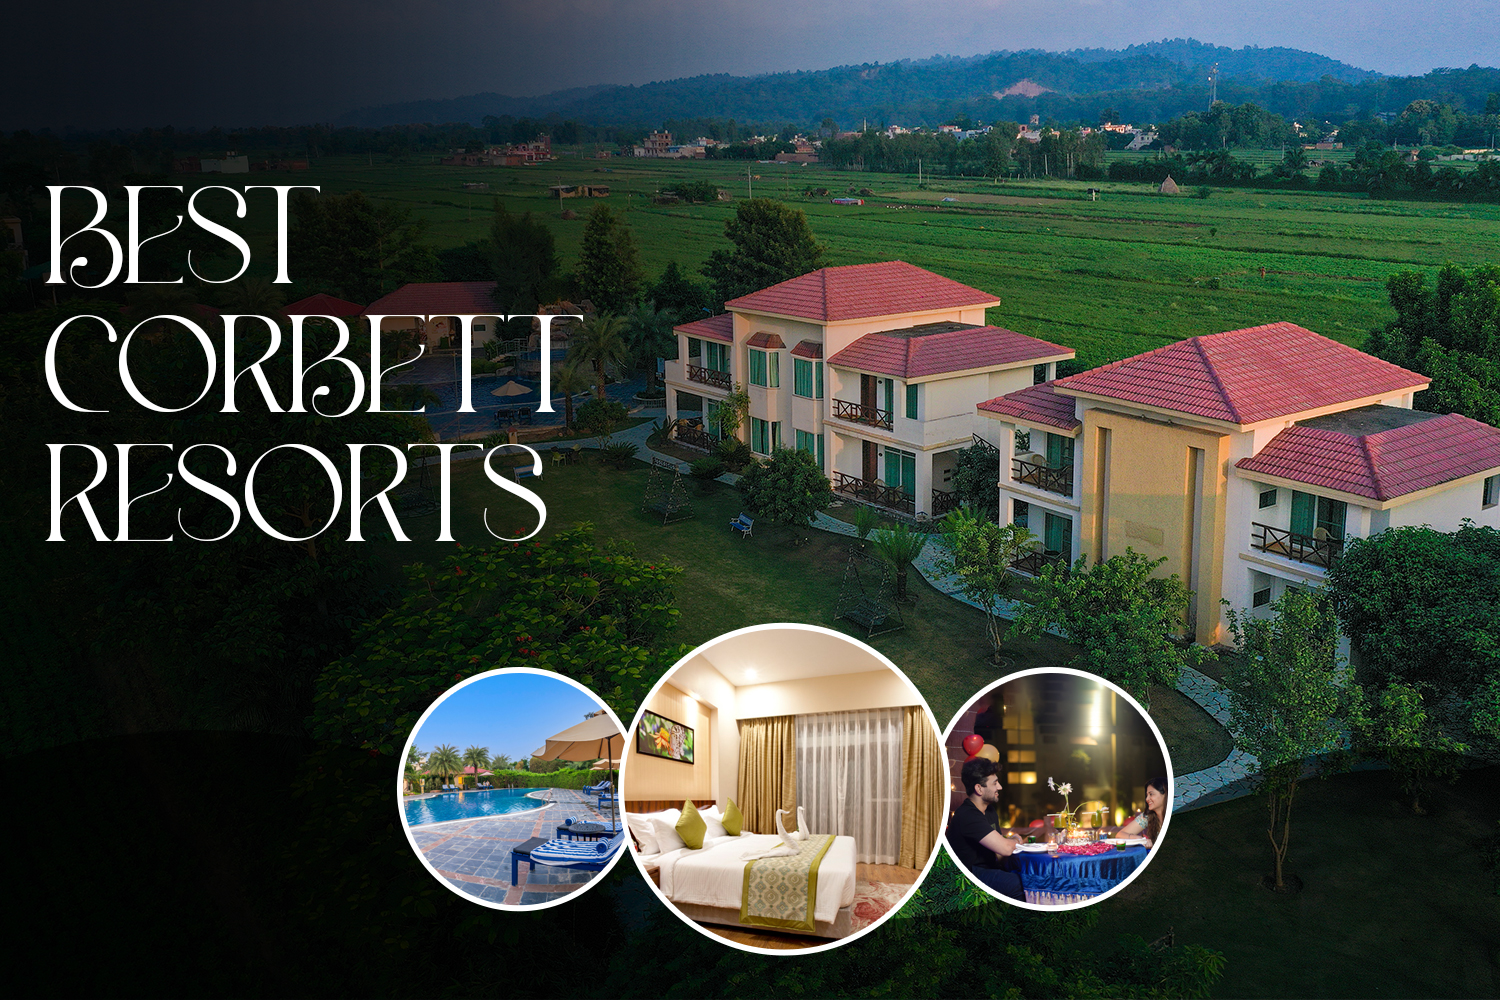 Make your winter vacation comfortable with one of the best Corbett resorts - Resort De CoraçÃo